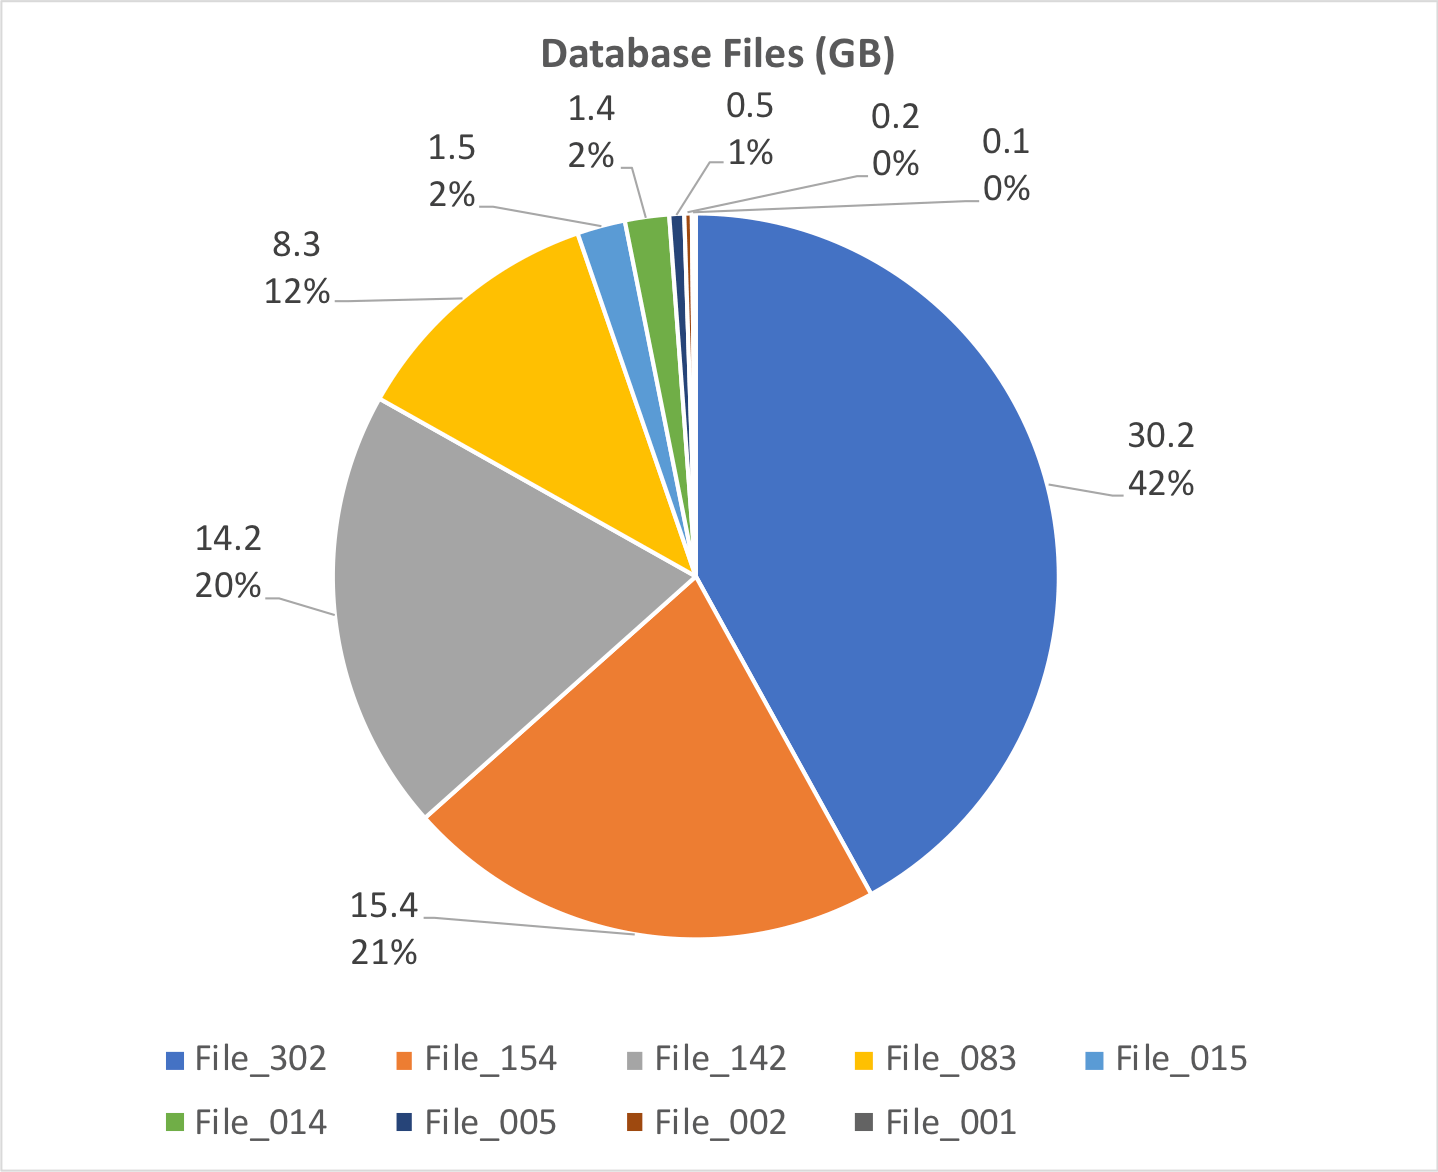 Screenshot of pie chart showing file sizes